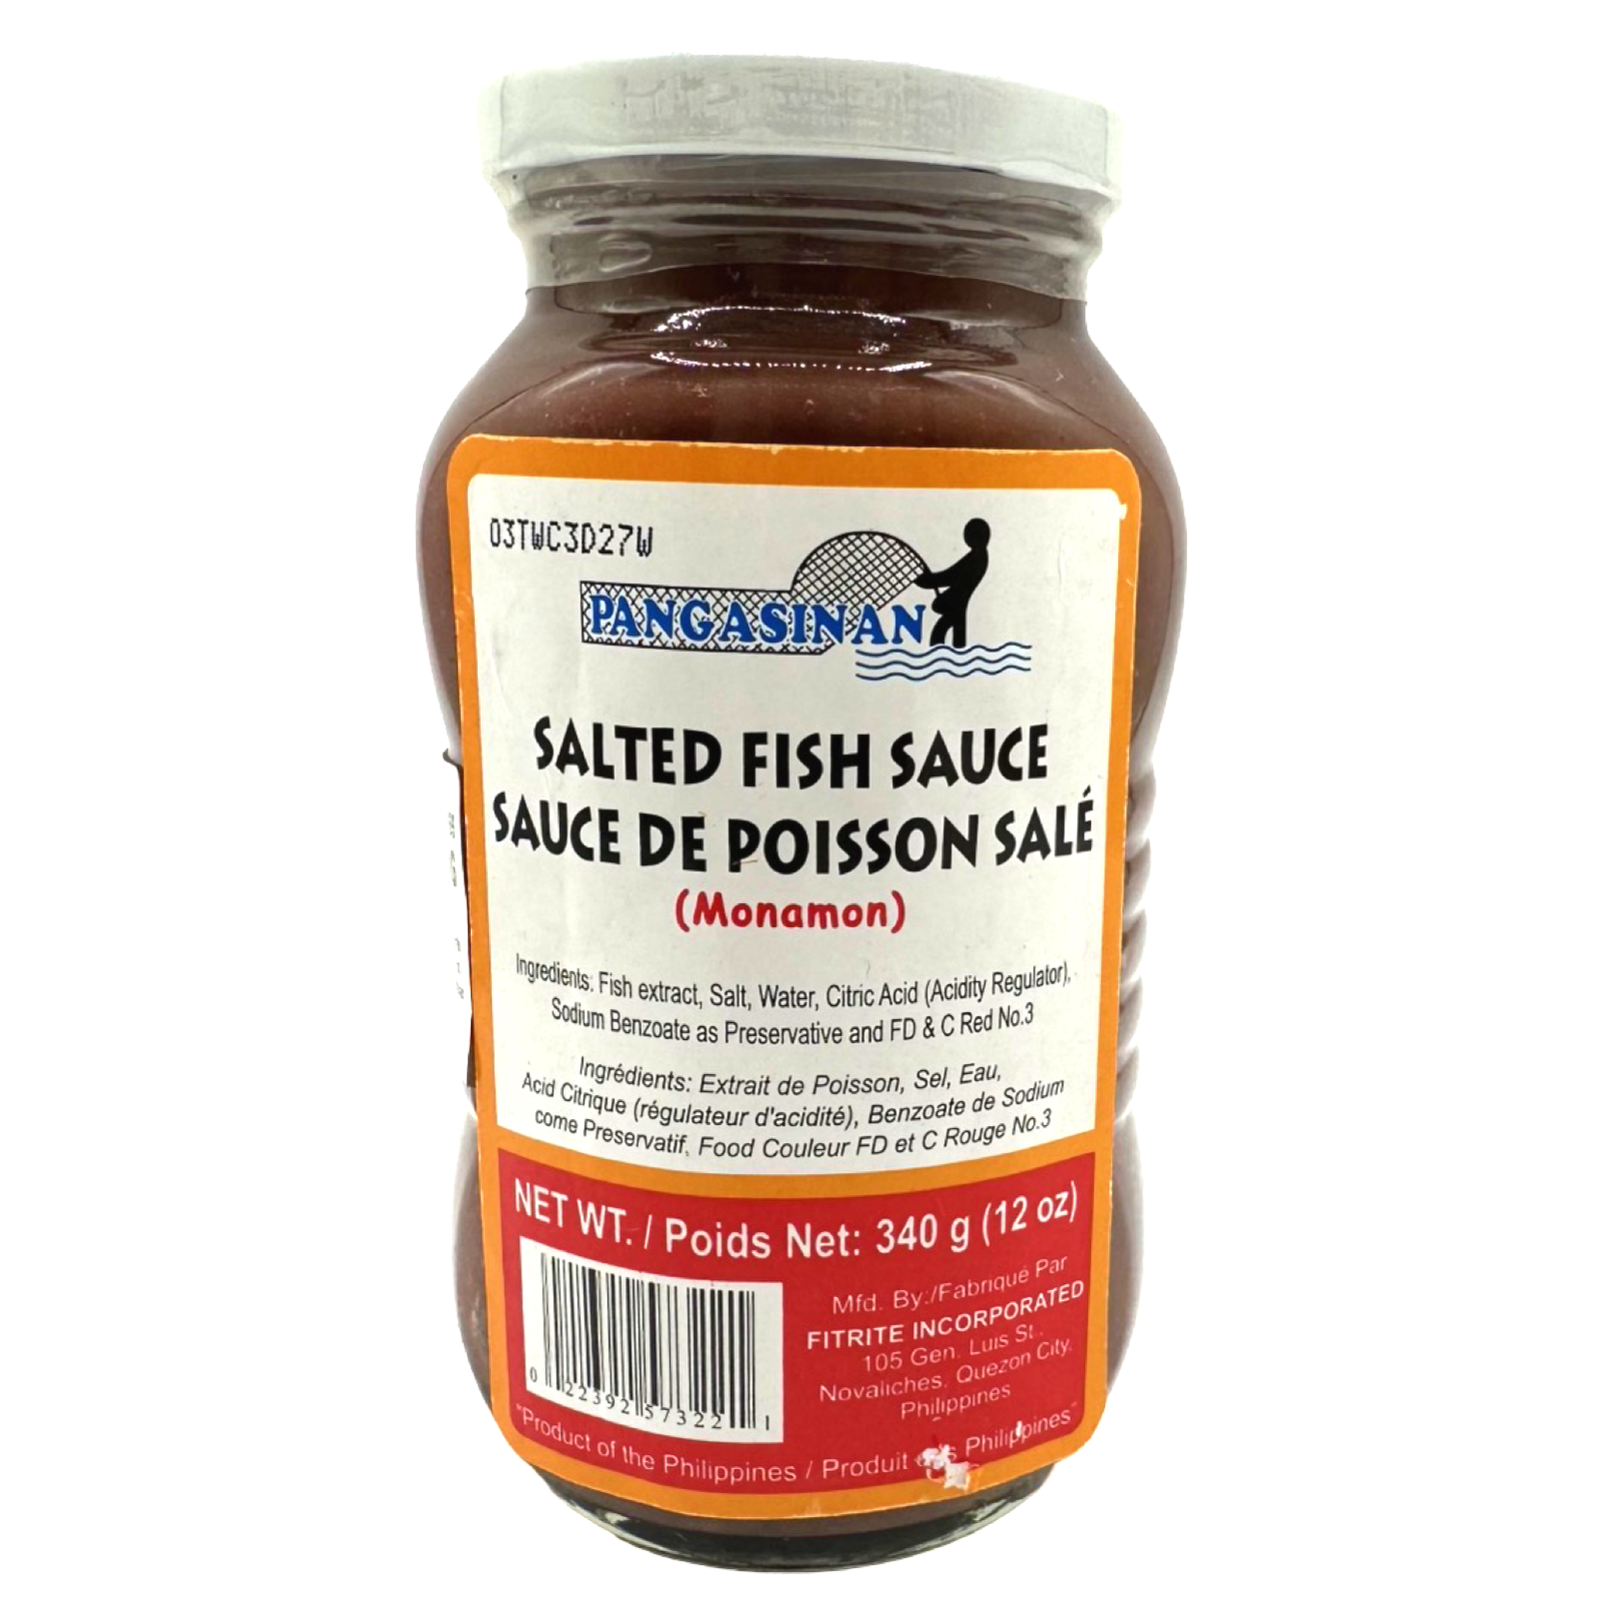 Pangasinan - Salted Fish Sauce - Monamon - 12 OZ